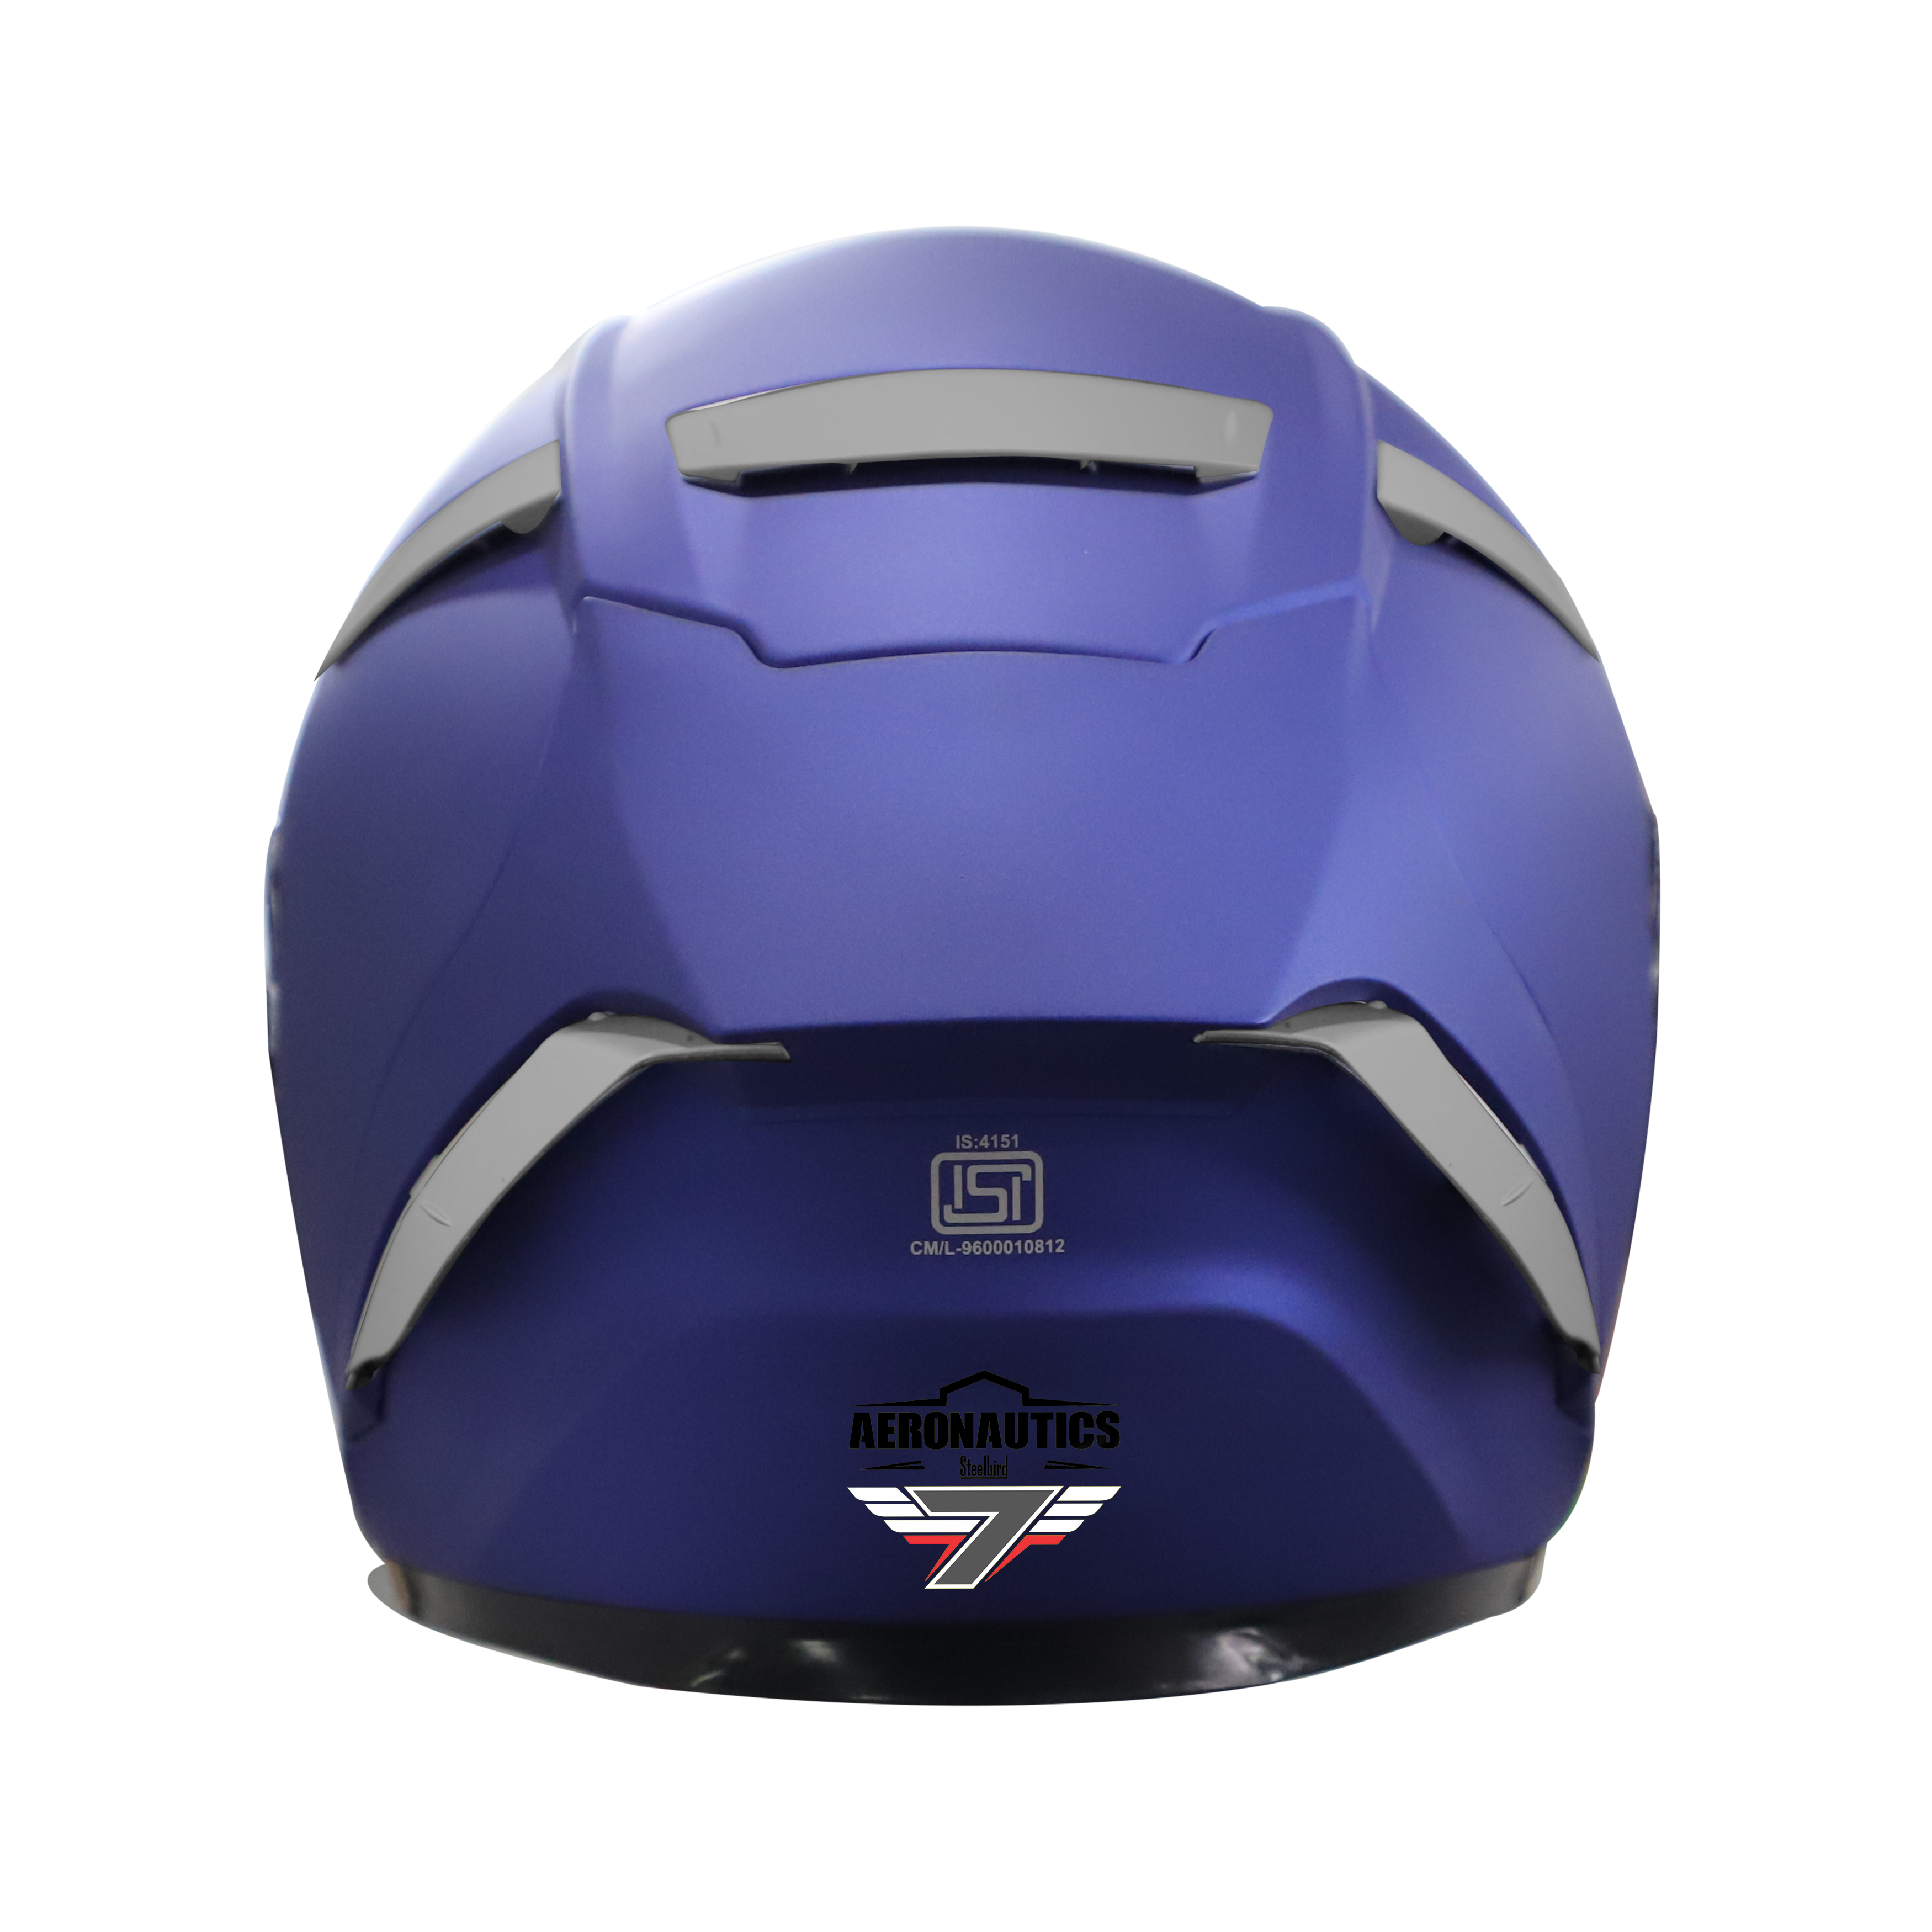 Steelbird SA-2 7Wings Super Aeronautics Full Face Helmet (Matt Y.Blue With Smoke Visor)